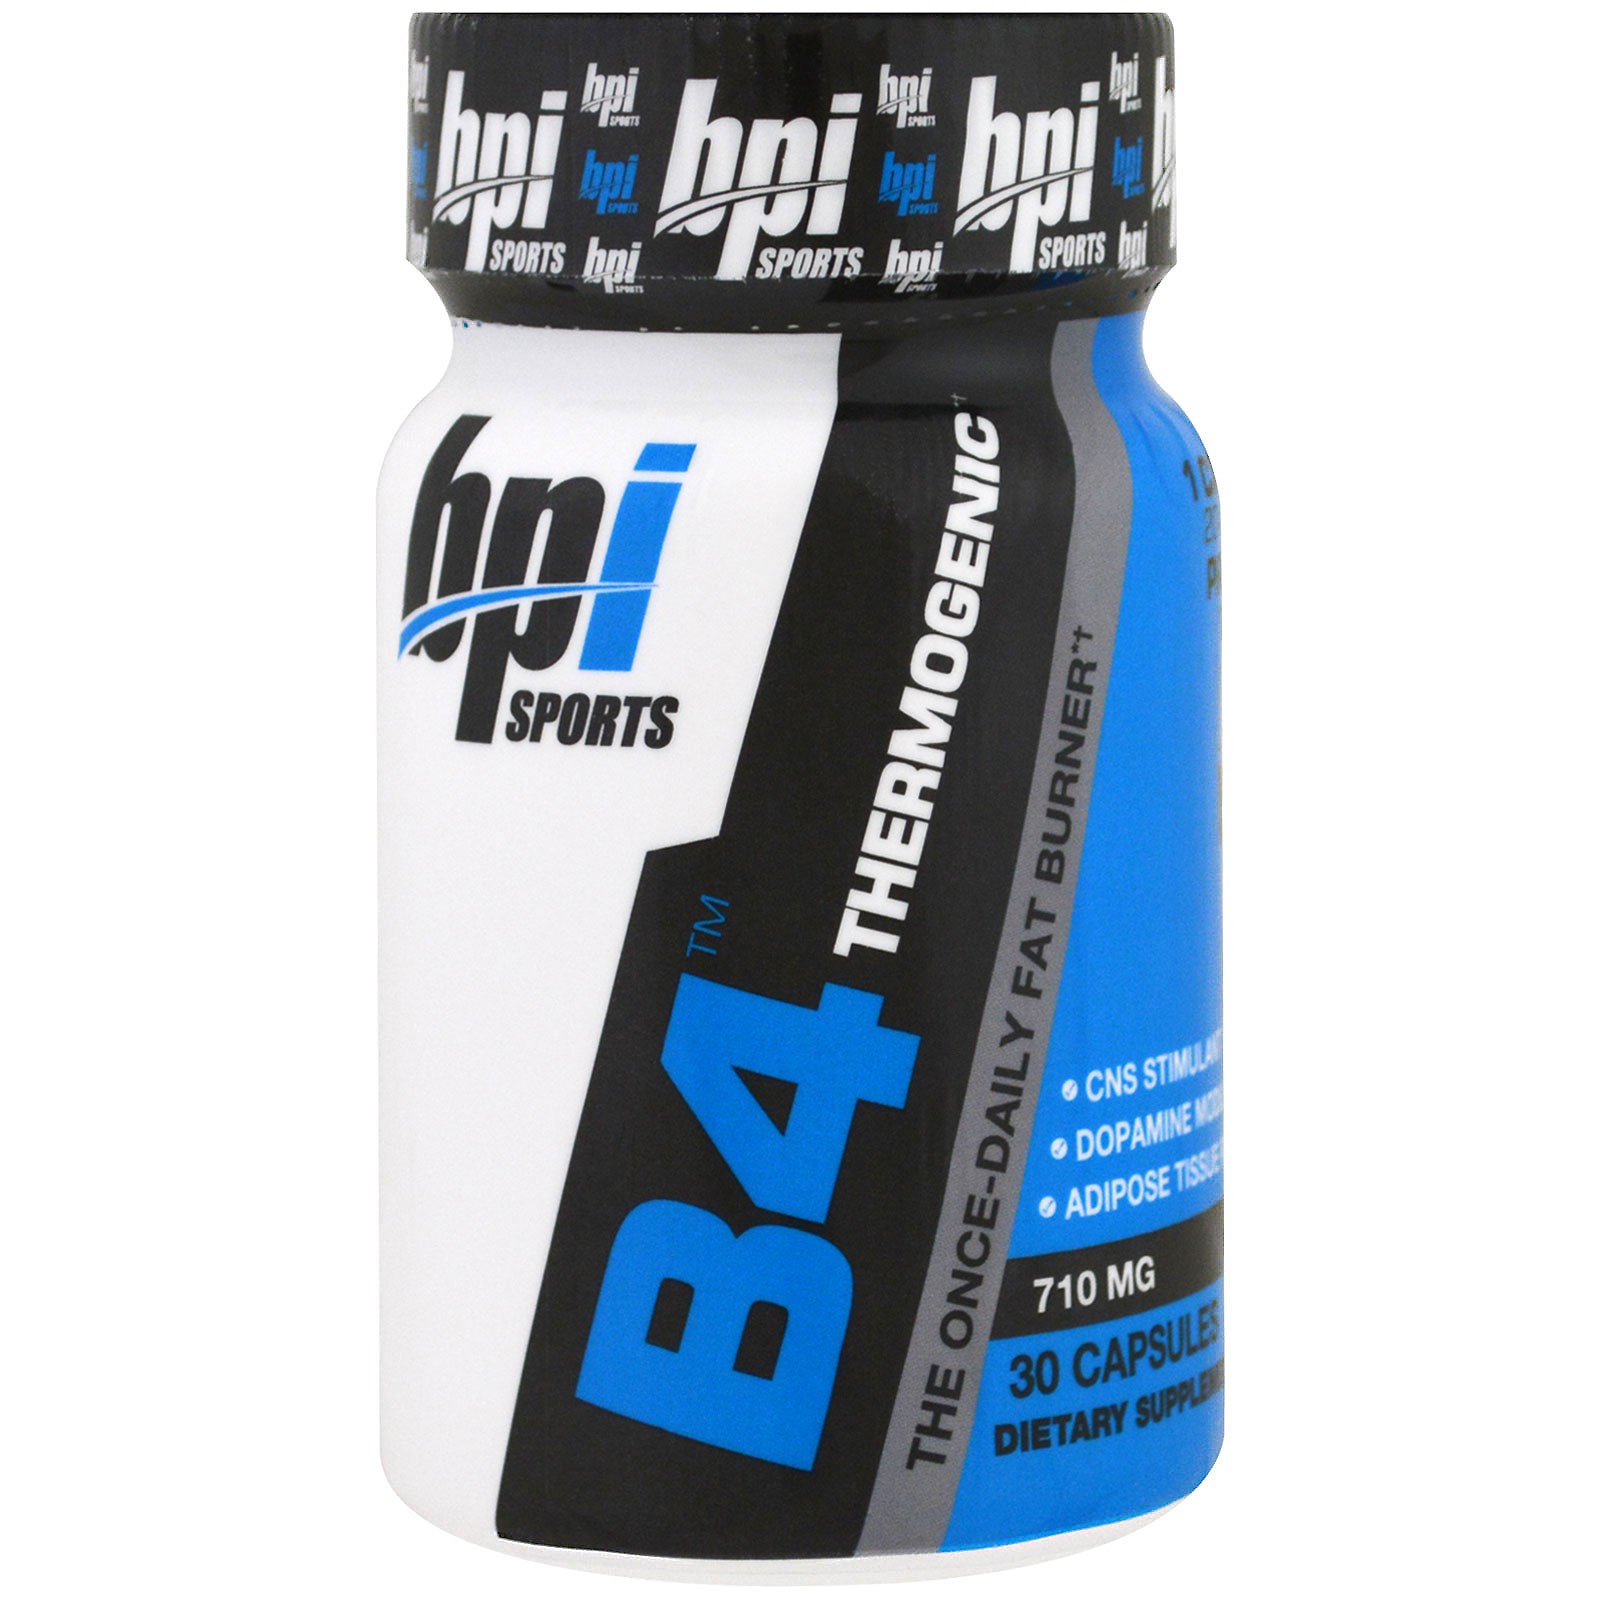 B4 - Fat Burning Supplements  BPI Sports Nutrition Supplements